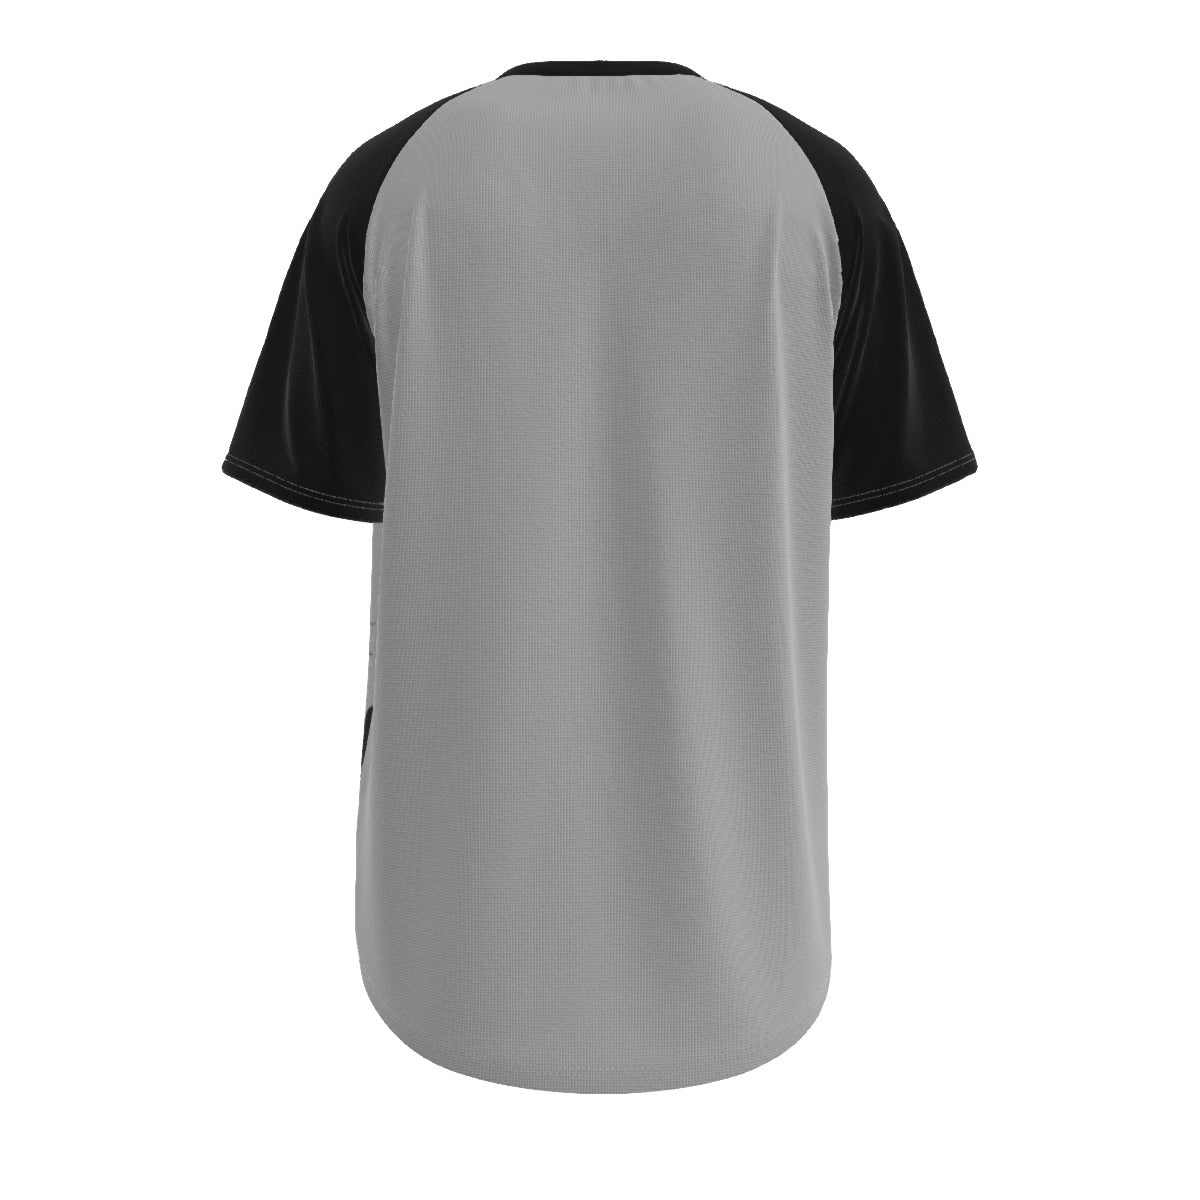 All-Over Print Men's O-neck Short Sleeve T-shirt